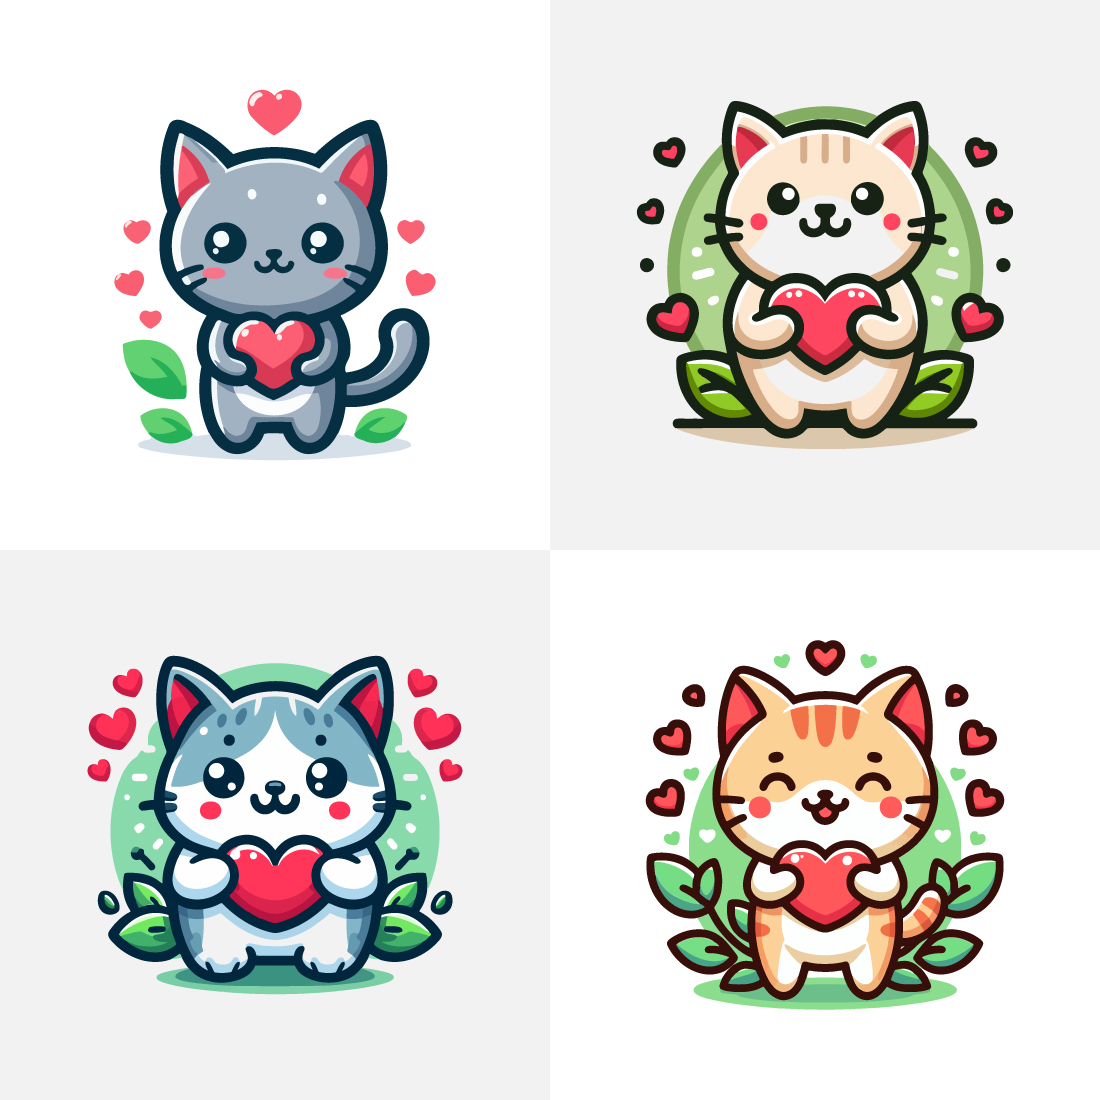 Cute Cat Logos cover image.